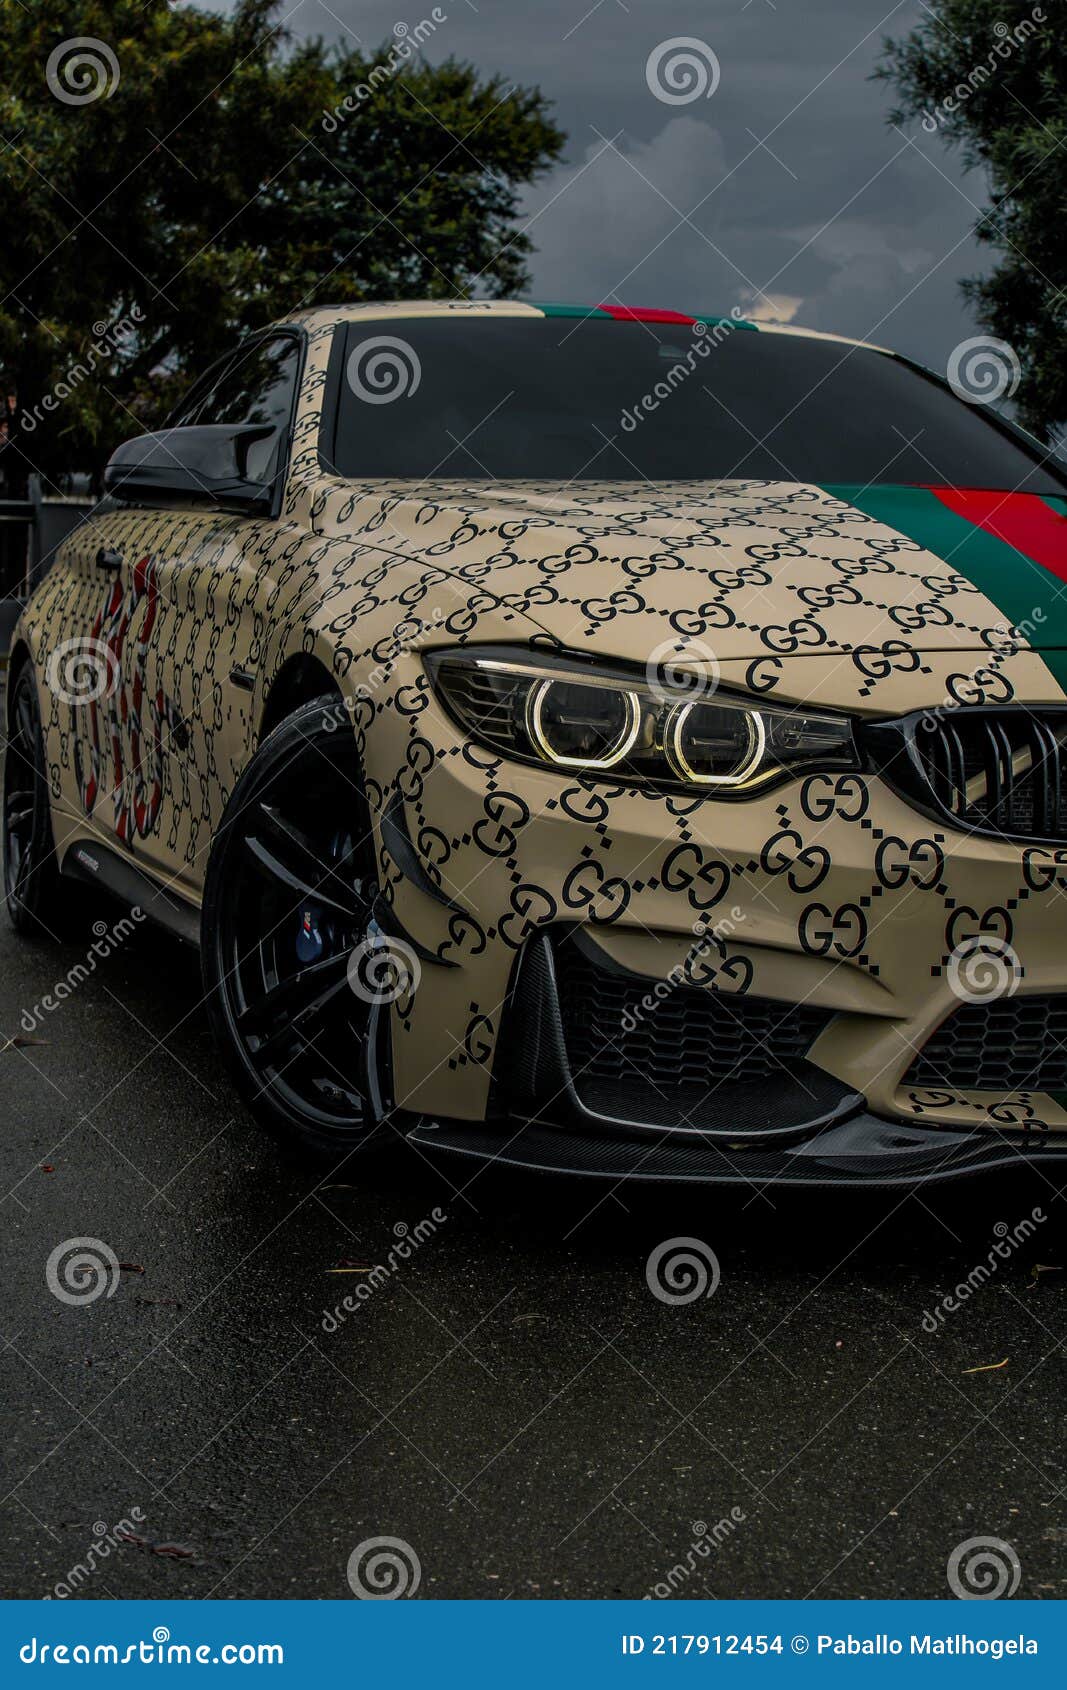 Gucci BMW M4 editorial stock image. Image of tire, bumper - 217912454